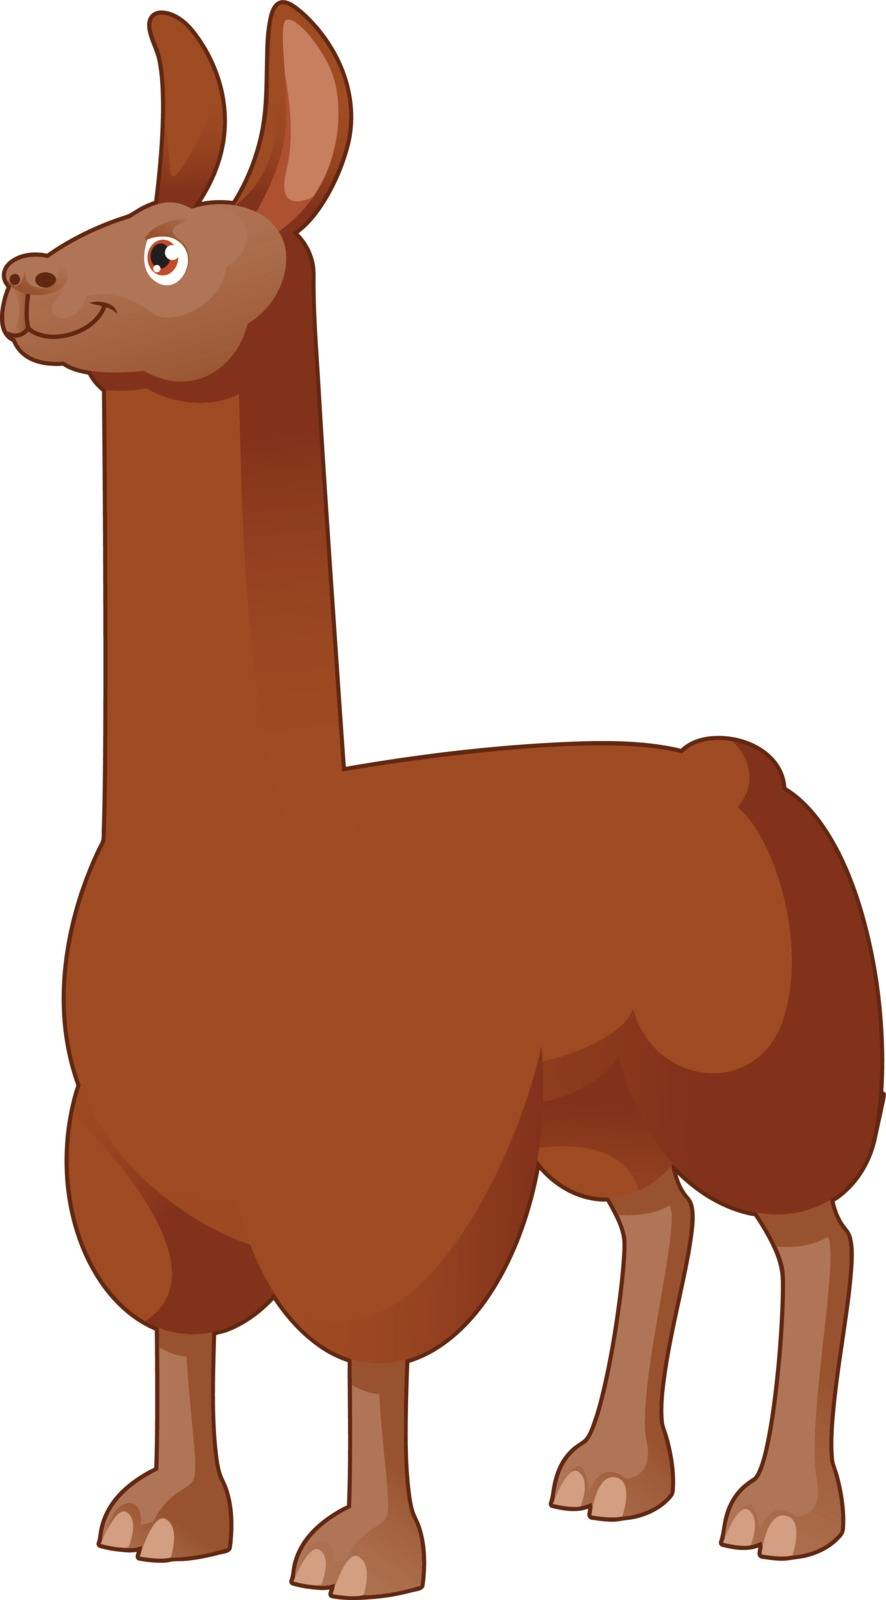 Vector image of a cartoon brown lama